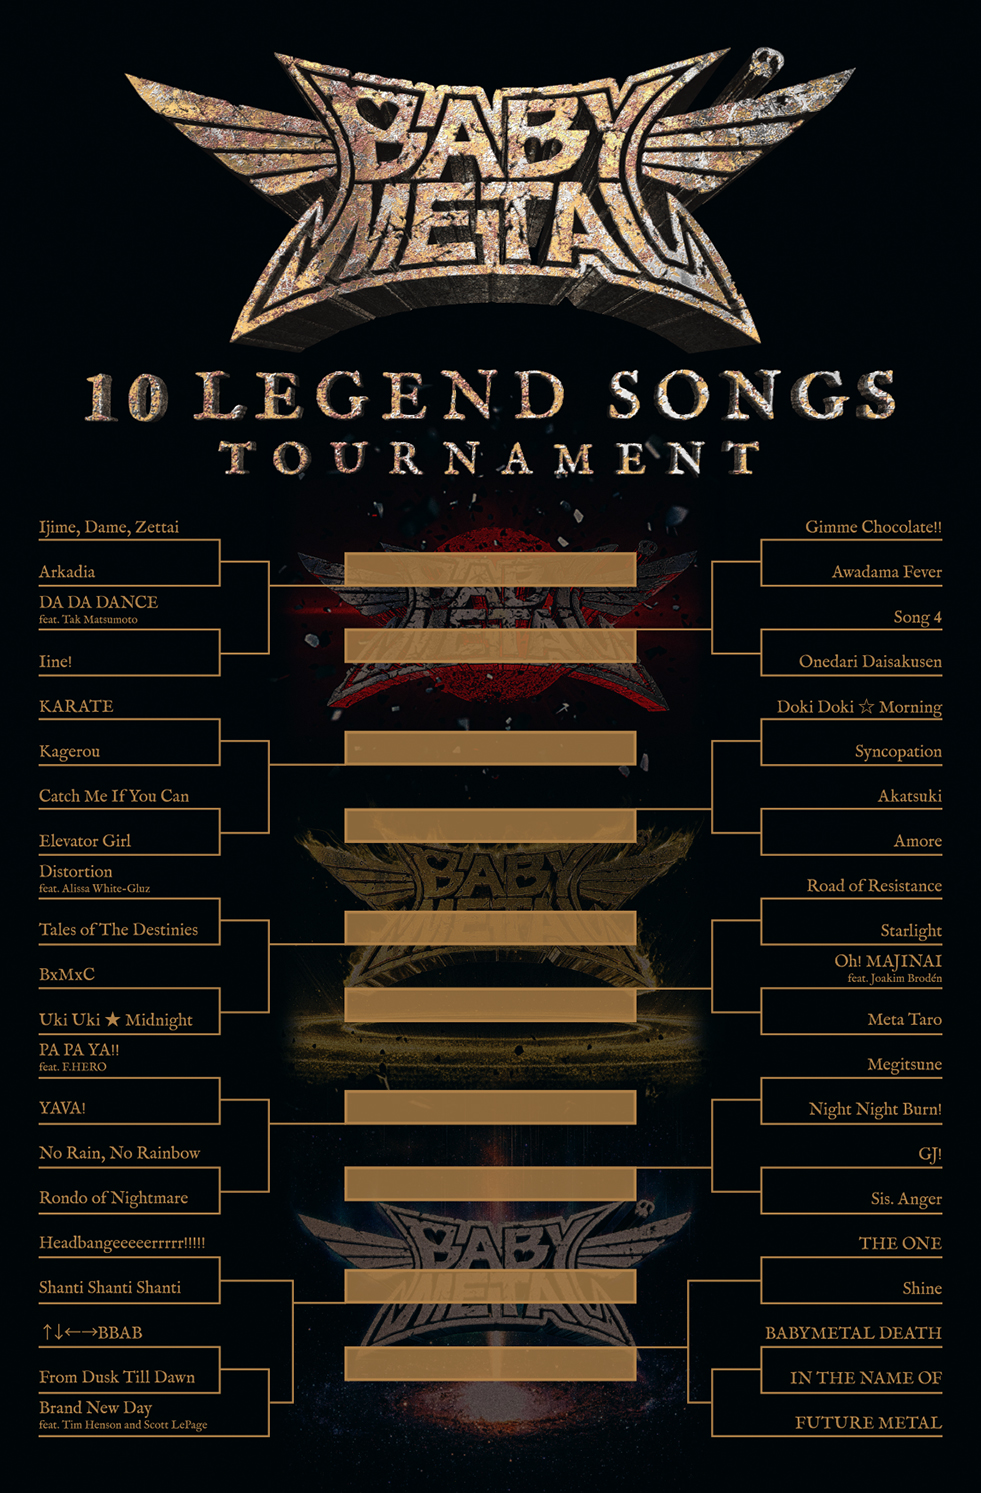 10 Legend Songs Tournament Announced Unofficial Babymetal News